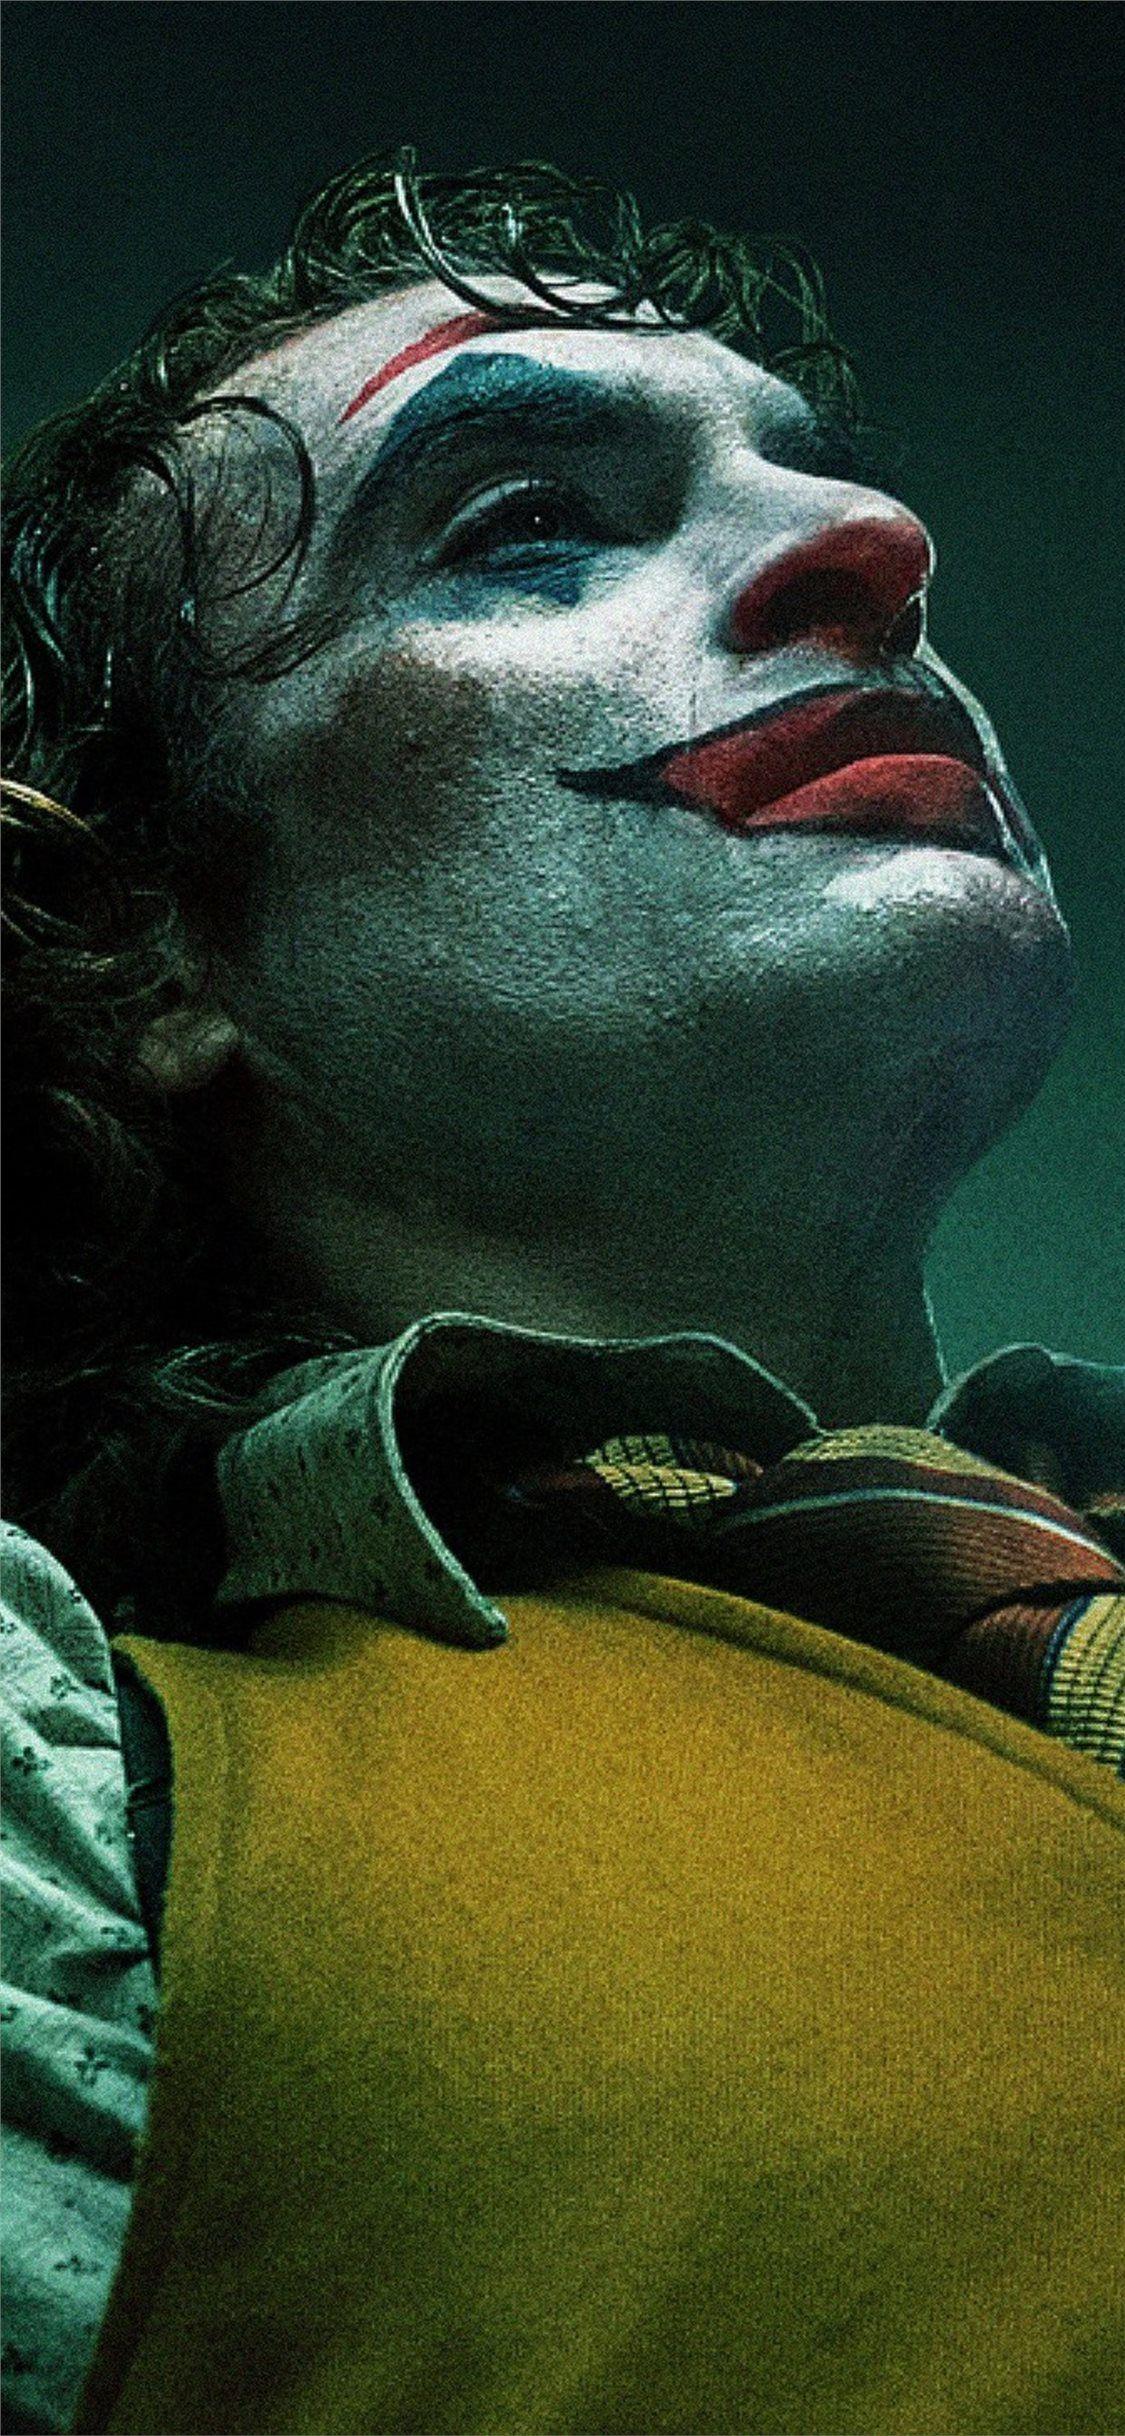 Joker Joaquin Phoenix iPhone X Wallpaper Free